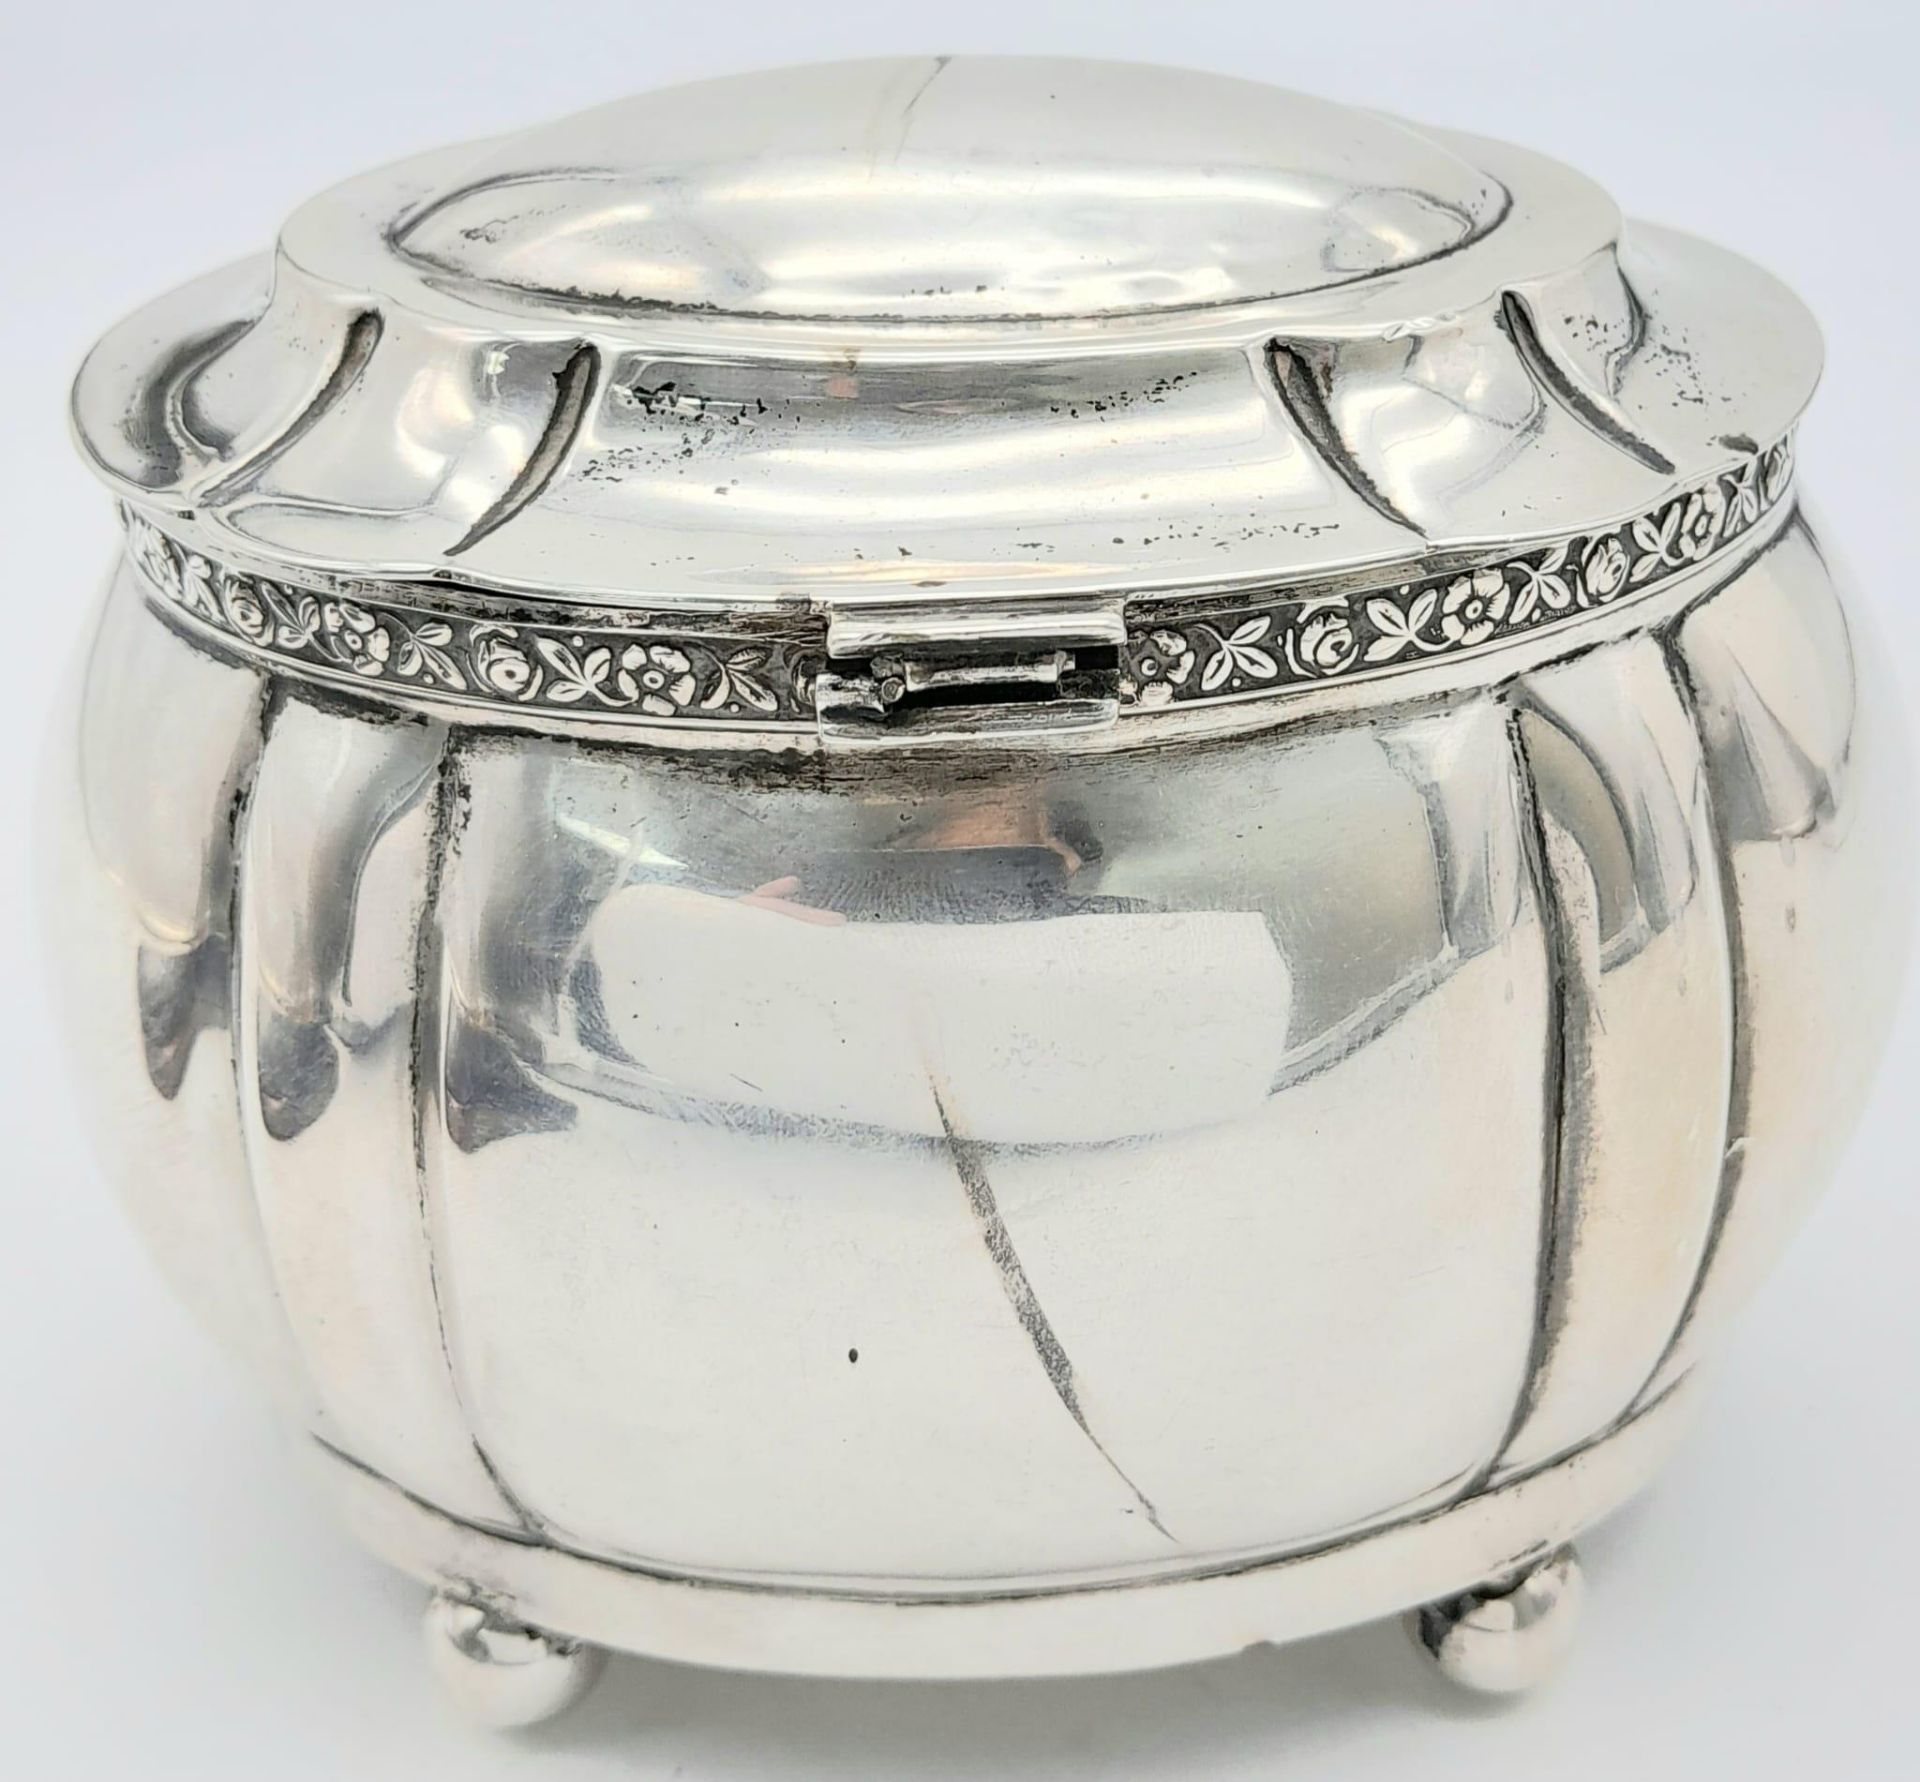 An Antique Austro-Hungarian Empire Silver Lidded Bowl. Decorative rim, four pedestal-ball feet. - Image 3 of 5